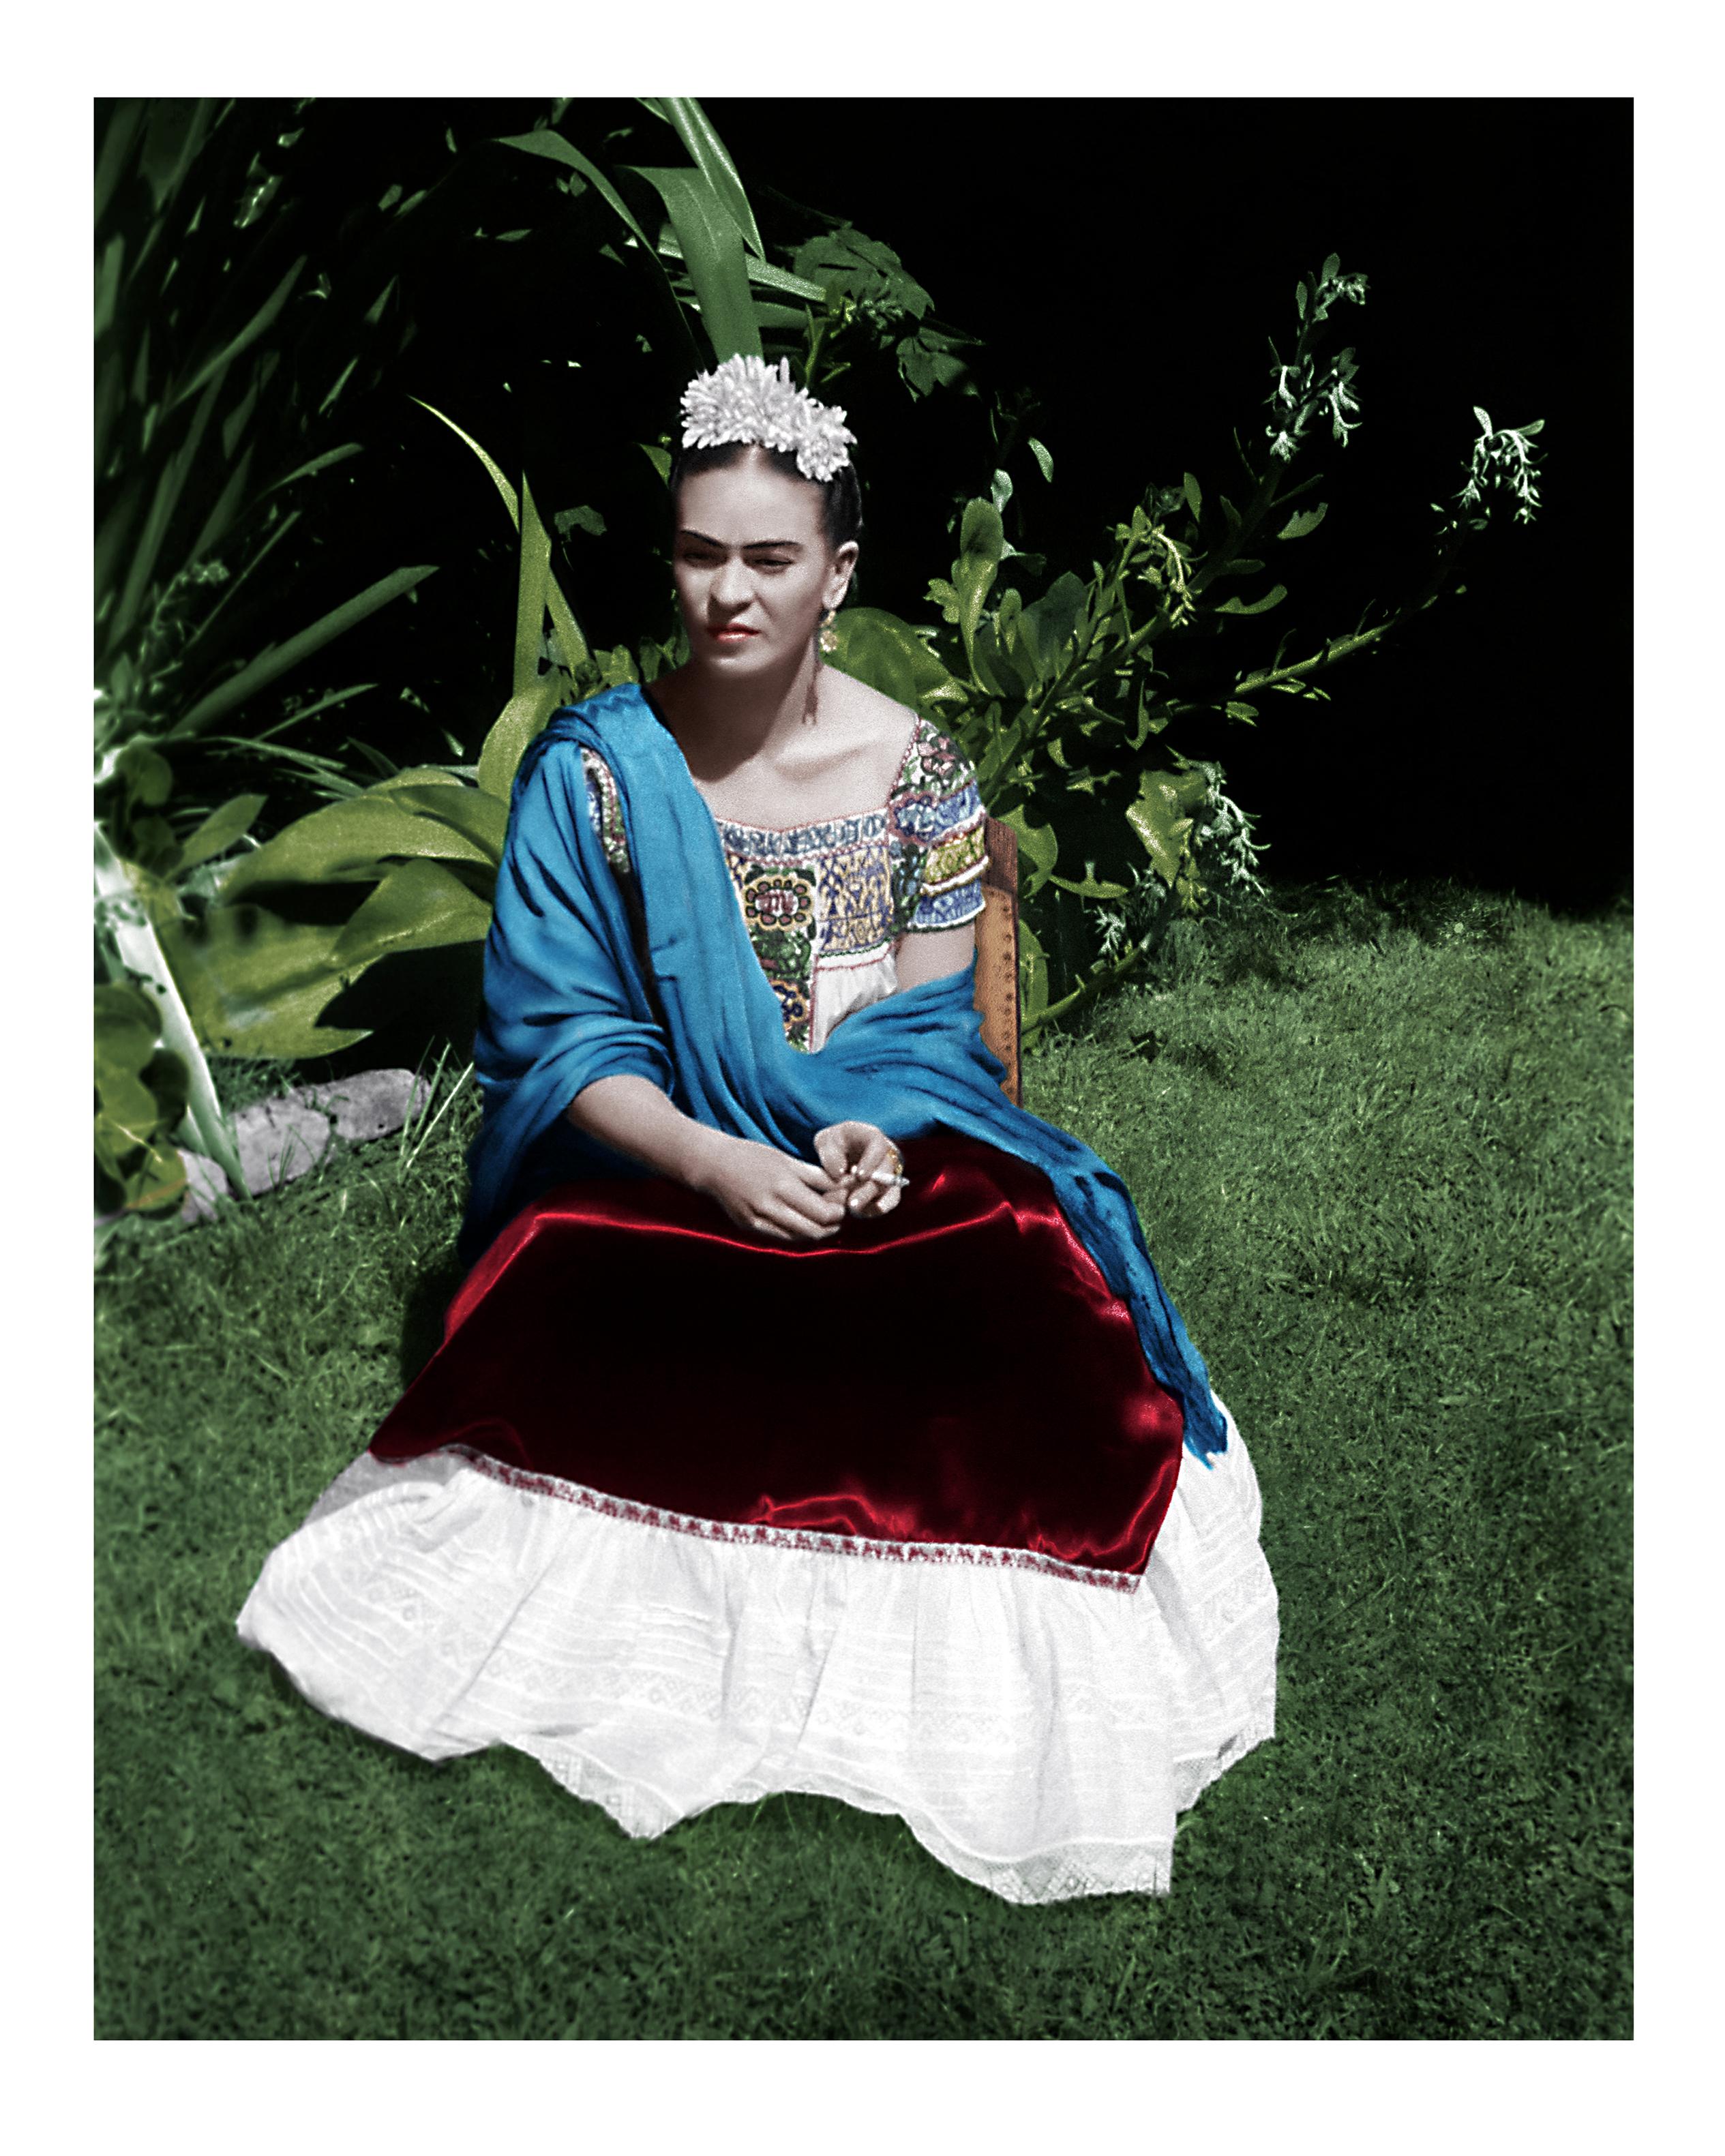 Leo Matiz Portrait Photograph - Frida Kahlo in the Blue House, Coyoacán, Mexico. 1943. Color Portrait